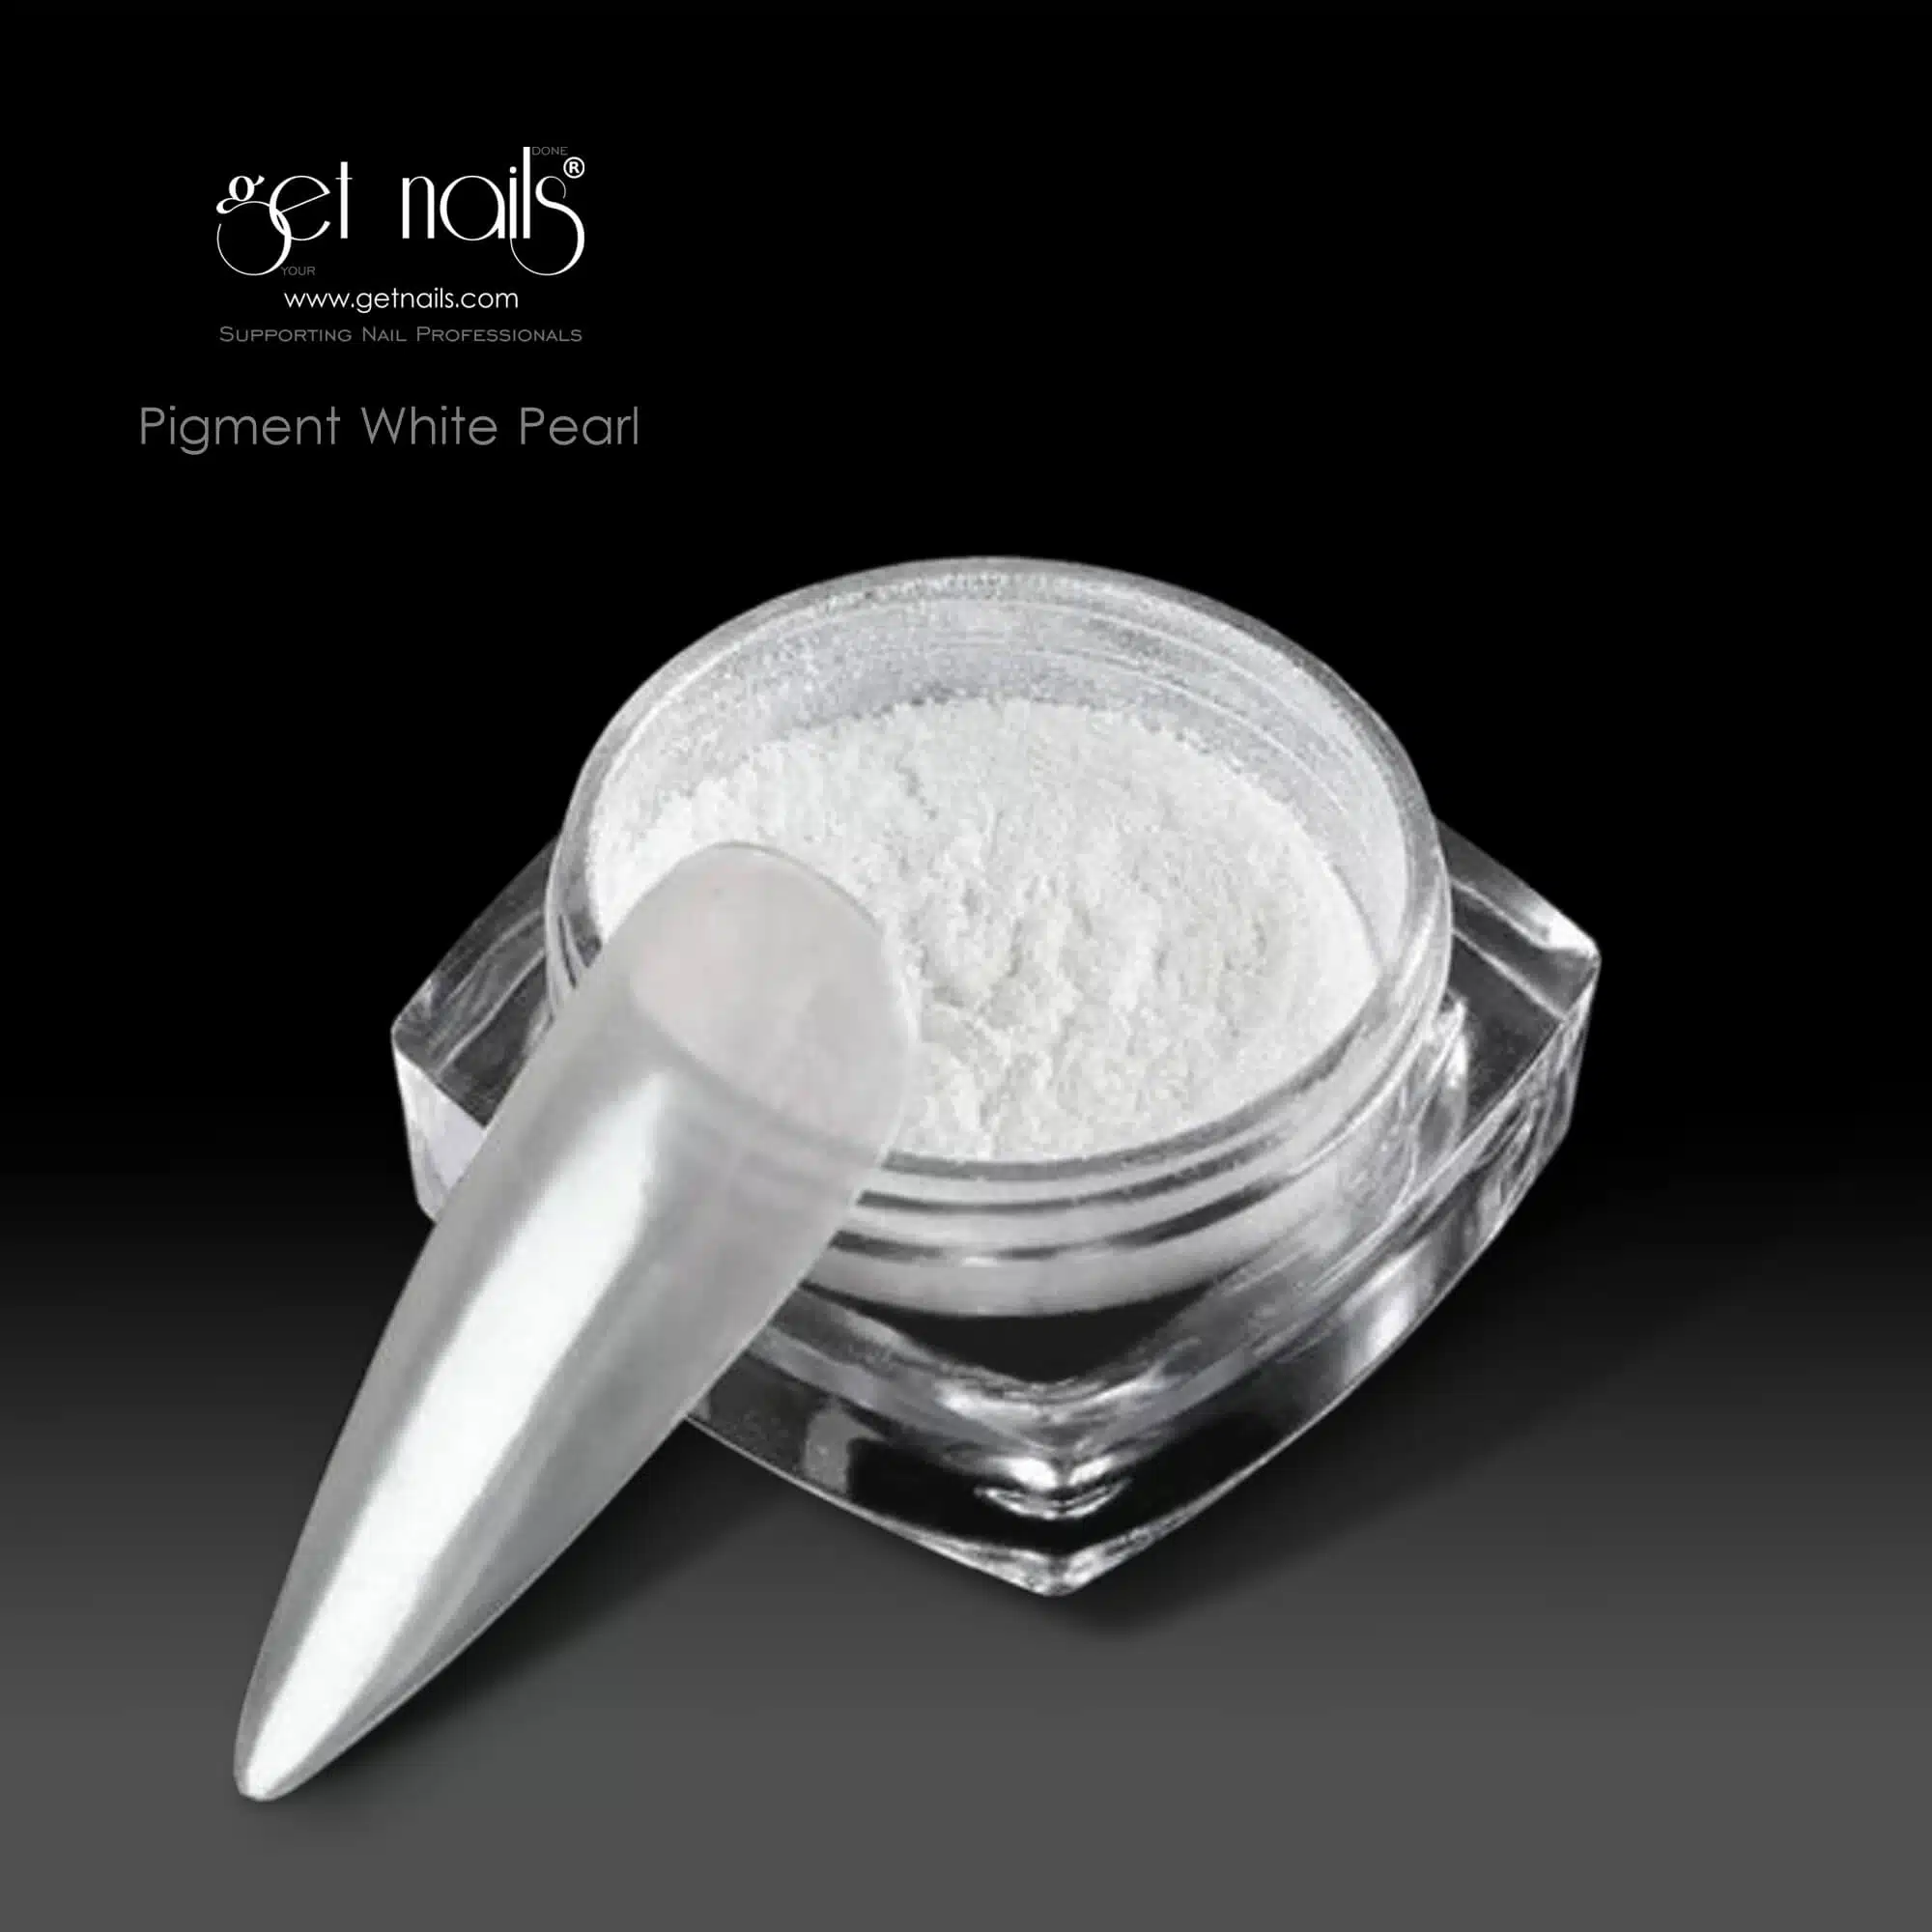 Get Nails Austria - Пигмент White Pearl